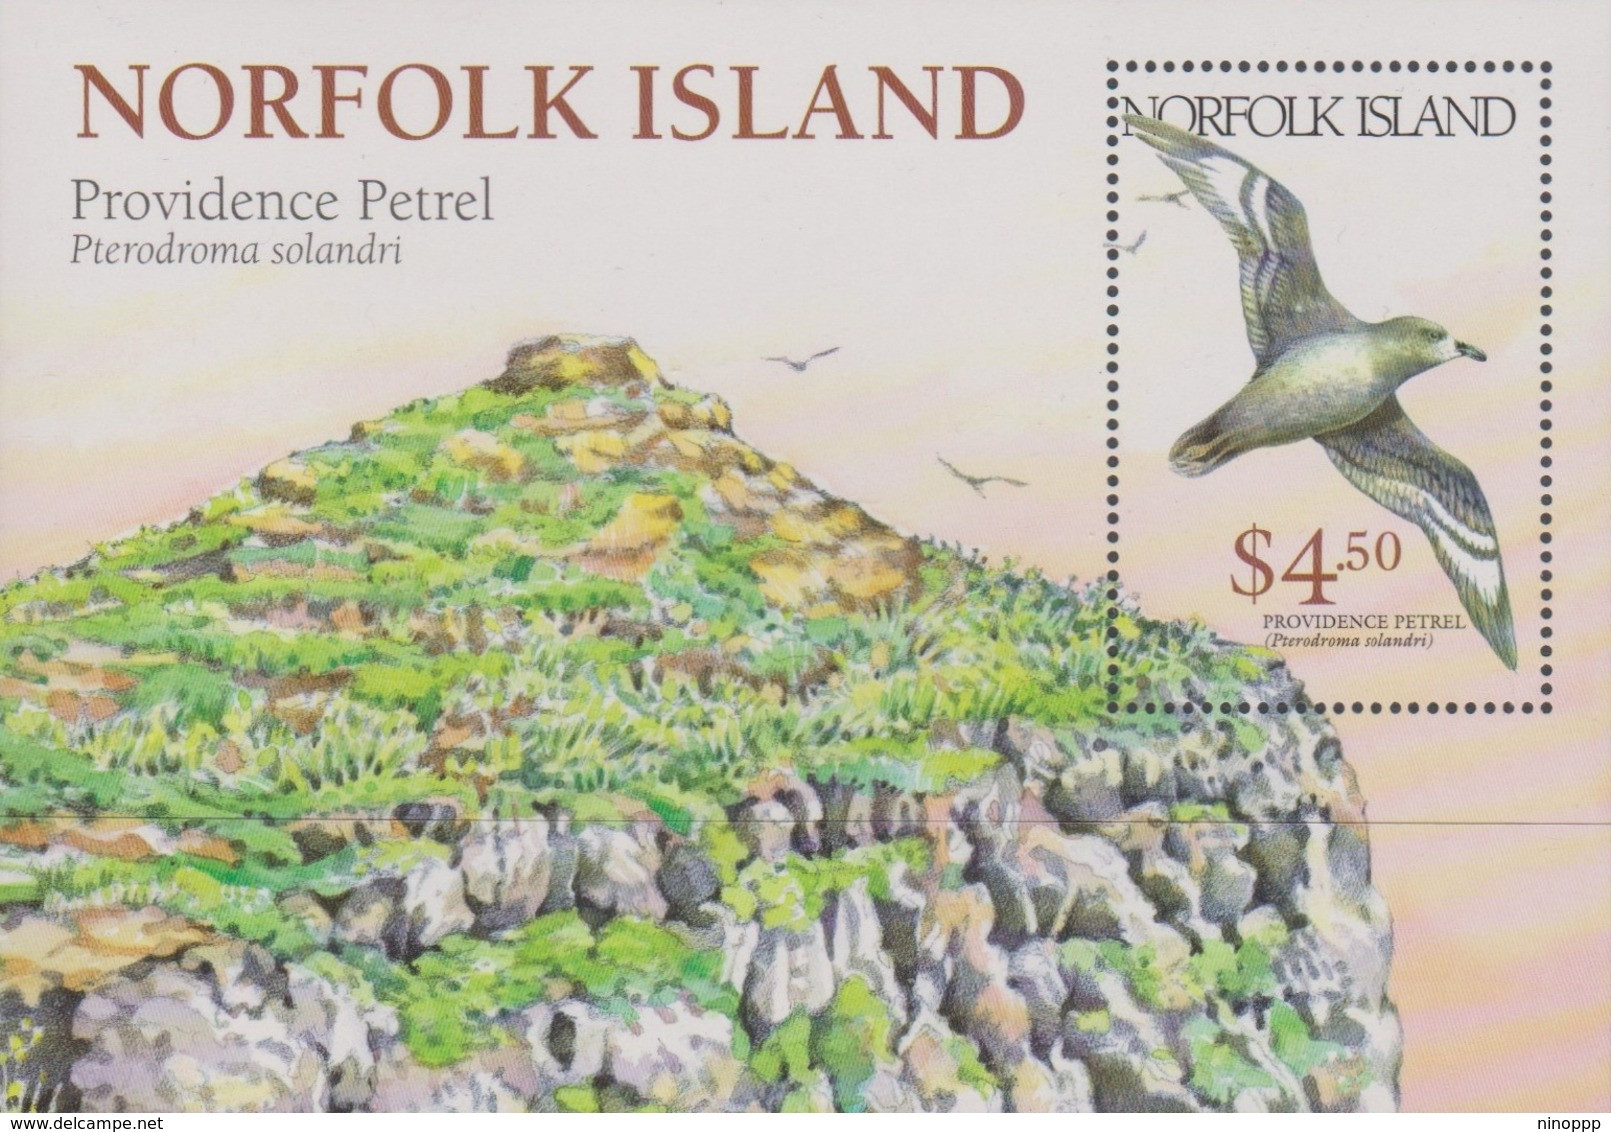 Norfolk Island ASC 689 MS 1999 Providence Petrel, Miniature Sheet, Mint Never Hinged - Norfolkinsel